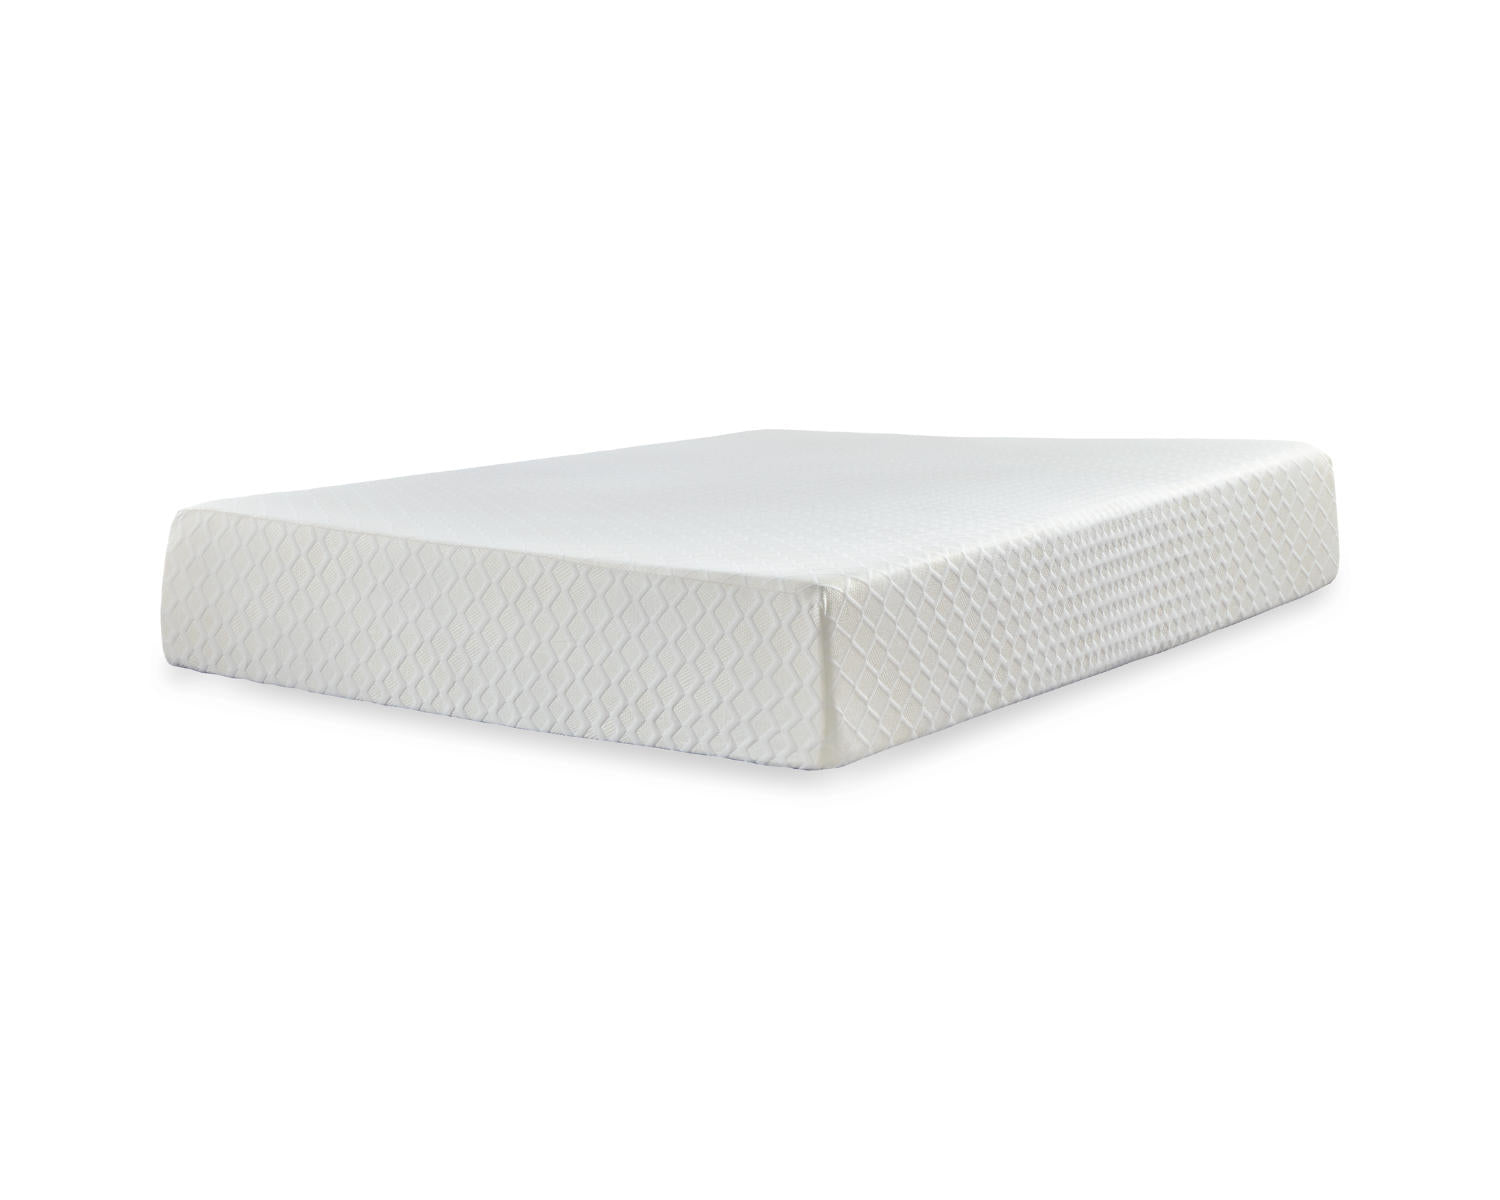 Ashley Sierra Sleep Chime 12 Inch Memory Foam Full Mattress in a Box White M72721